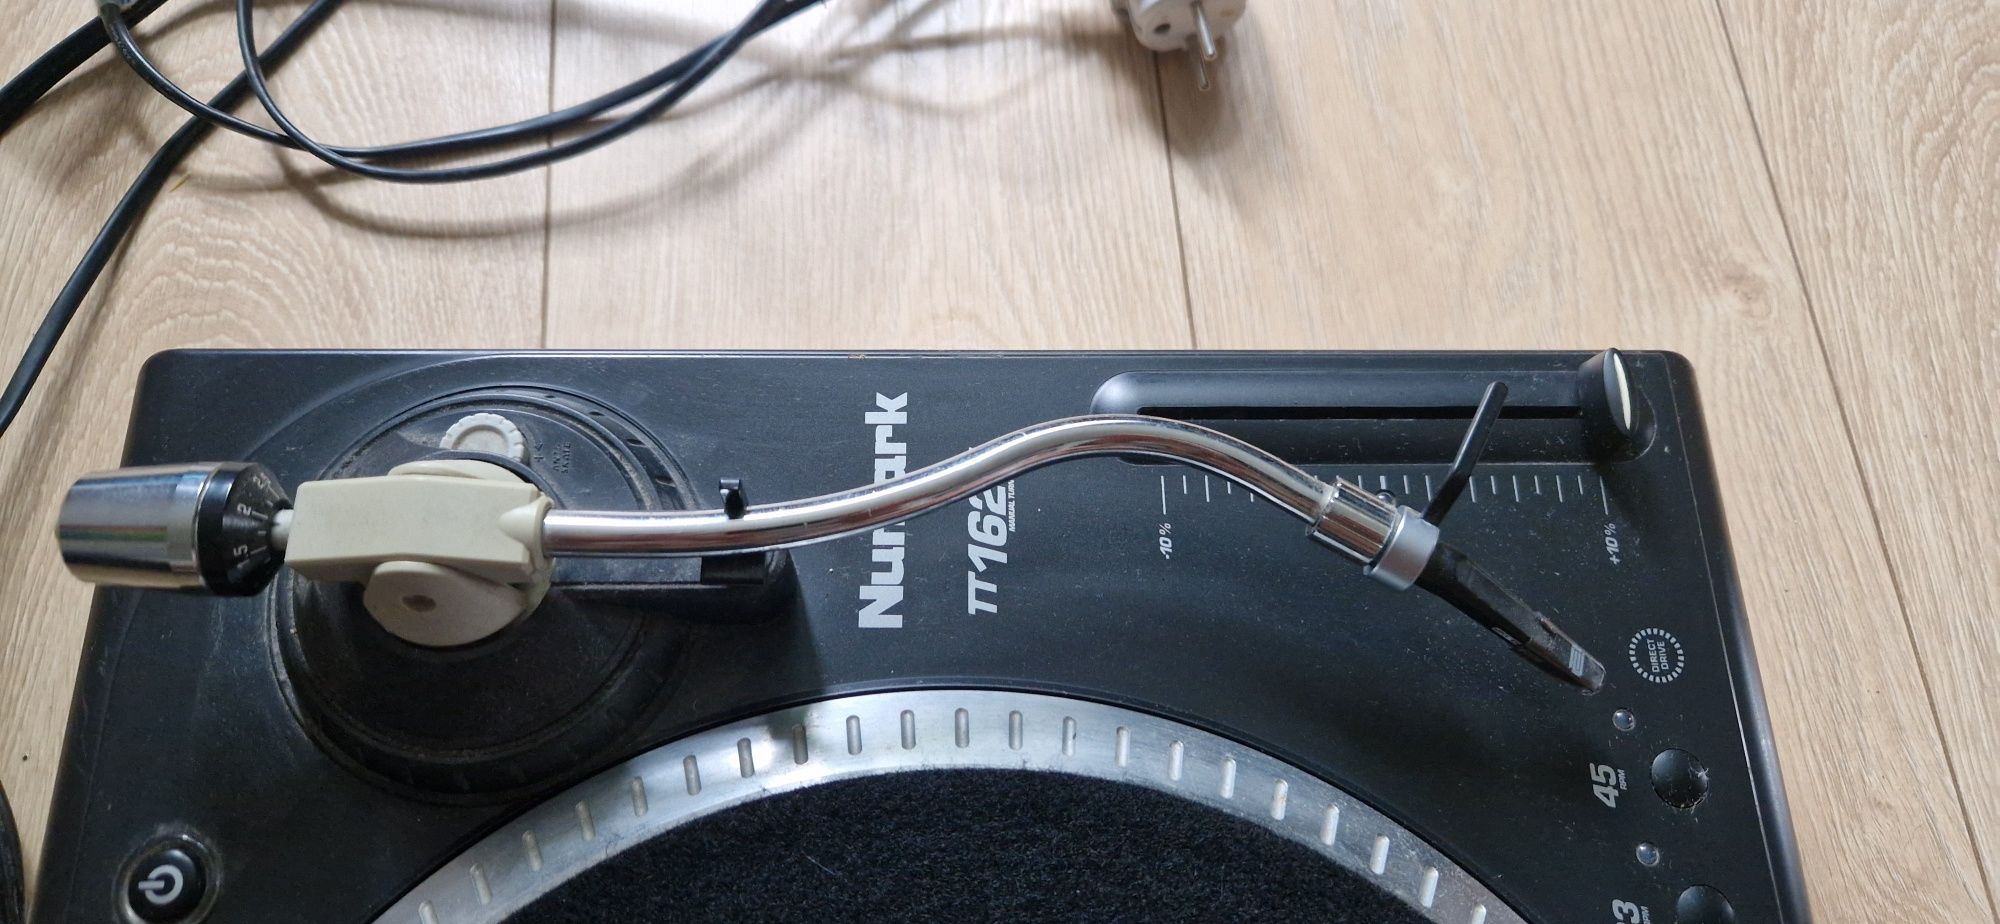 Gramofon Numark TT1625 igła reloop + mixer numark M101